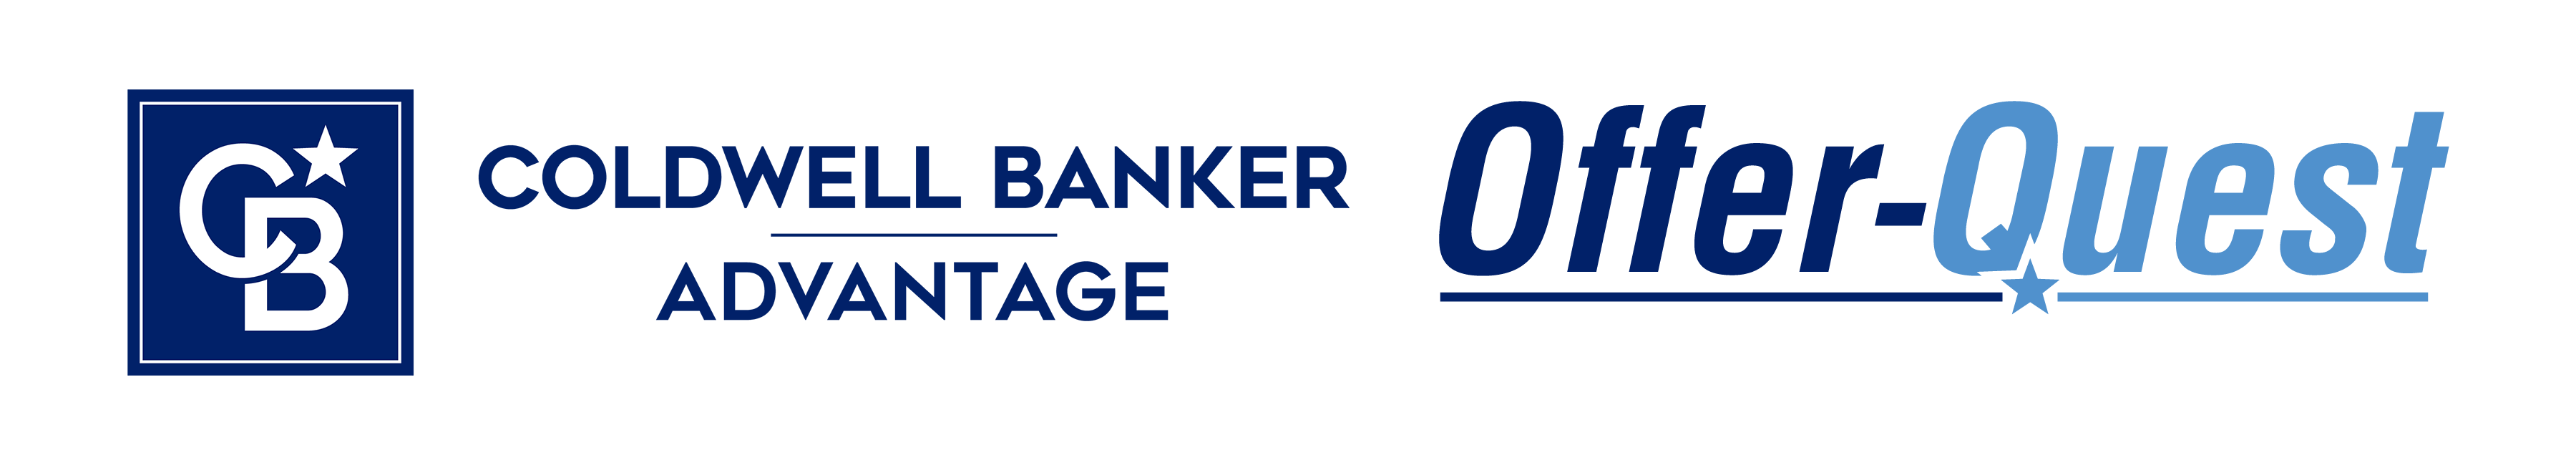 coldwell banker advantage logo